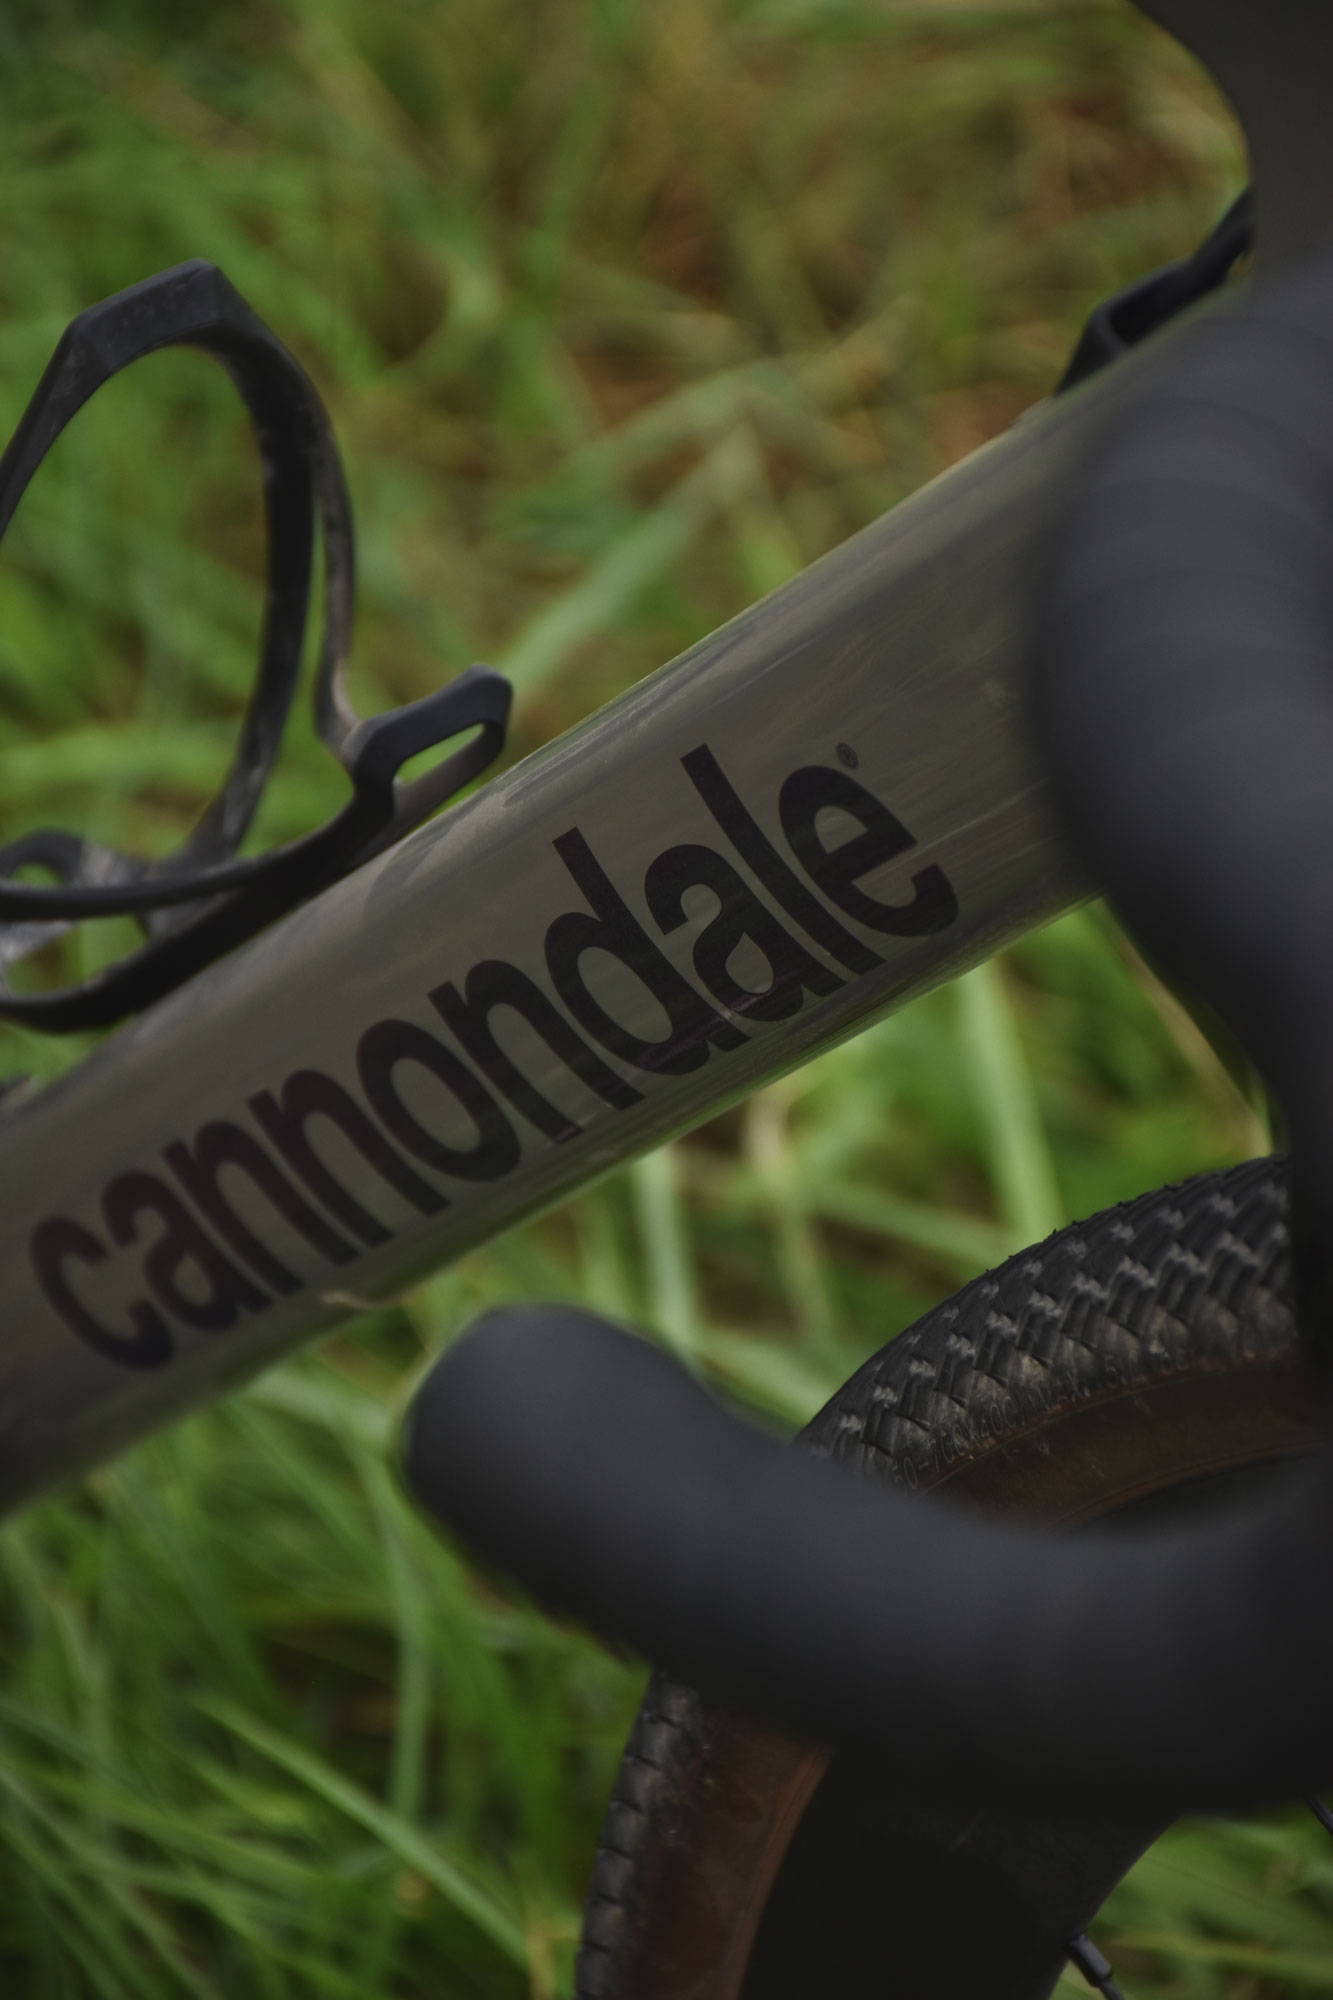 Cannondale logo on downtube